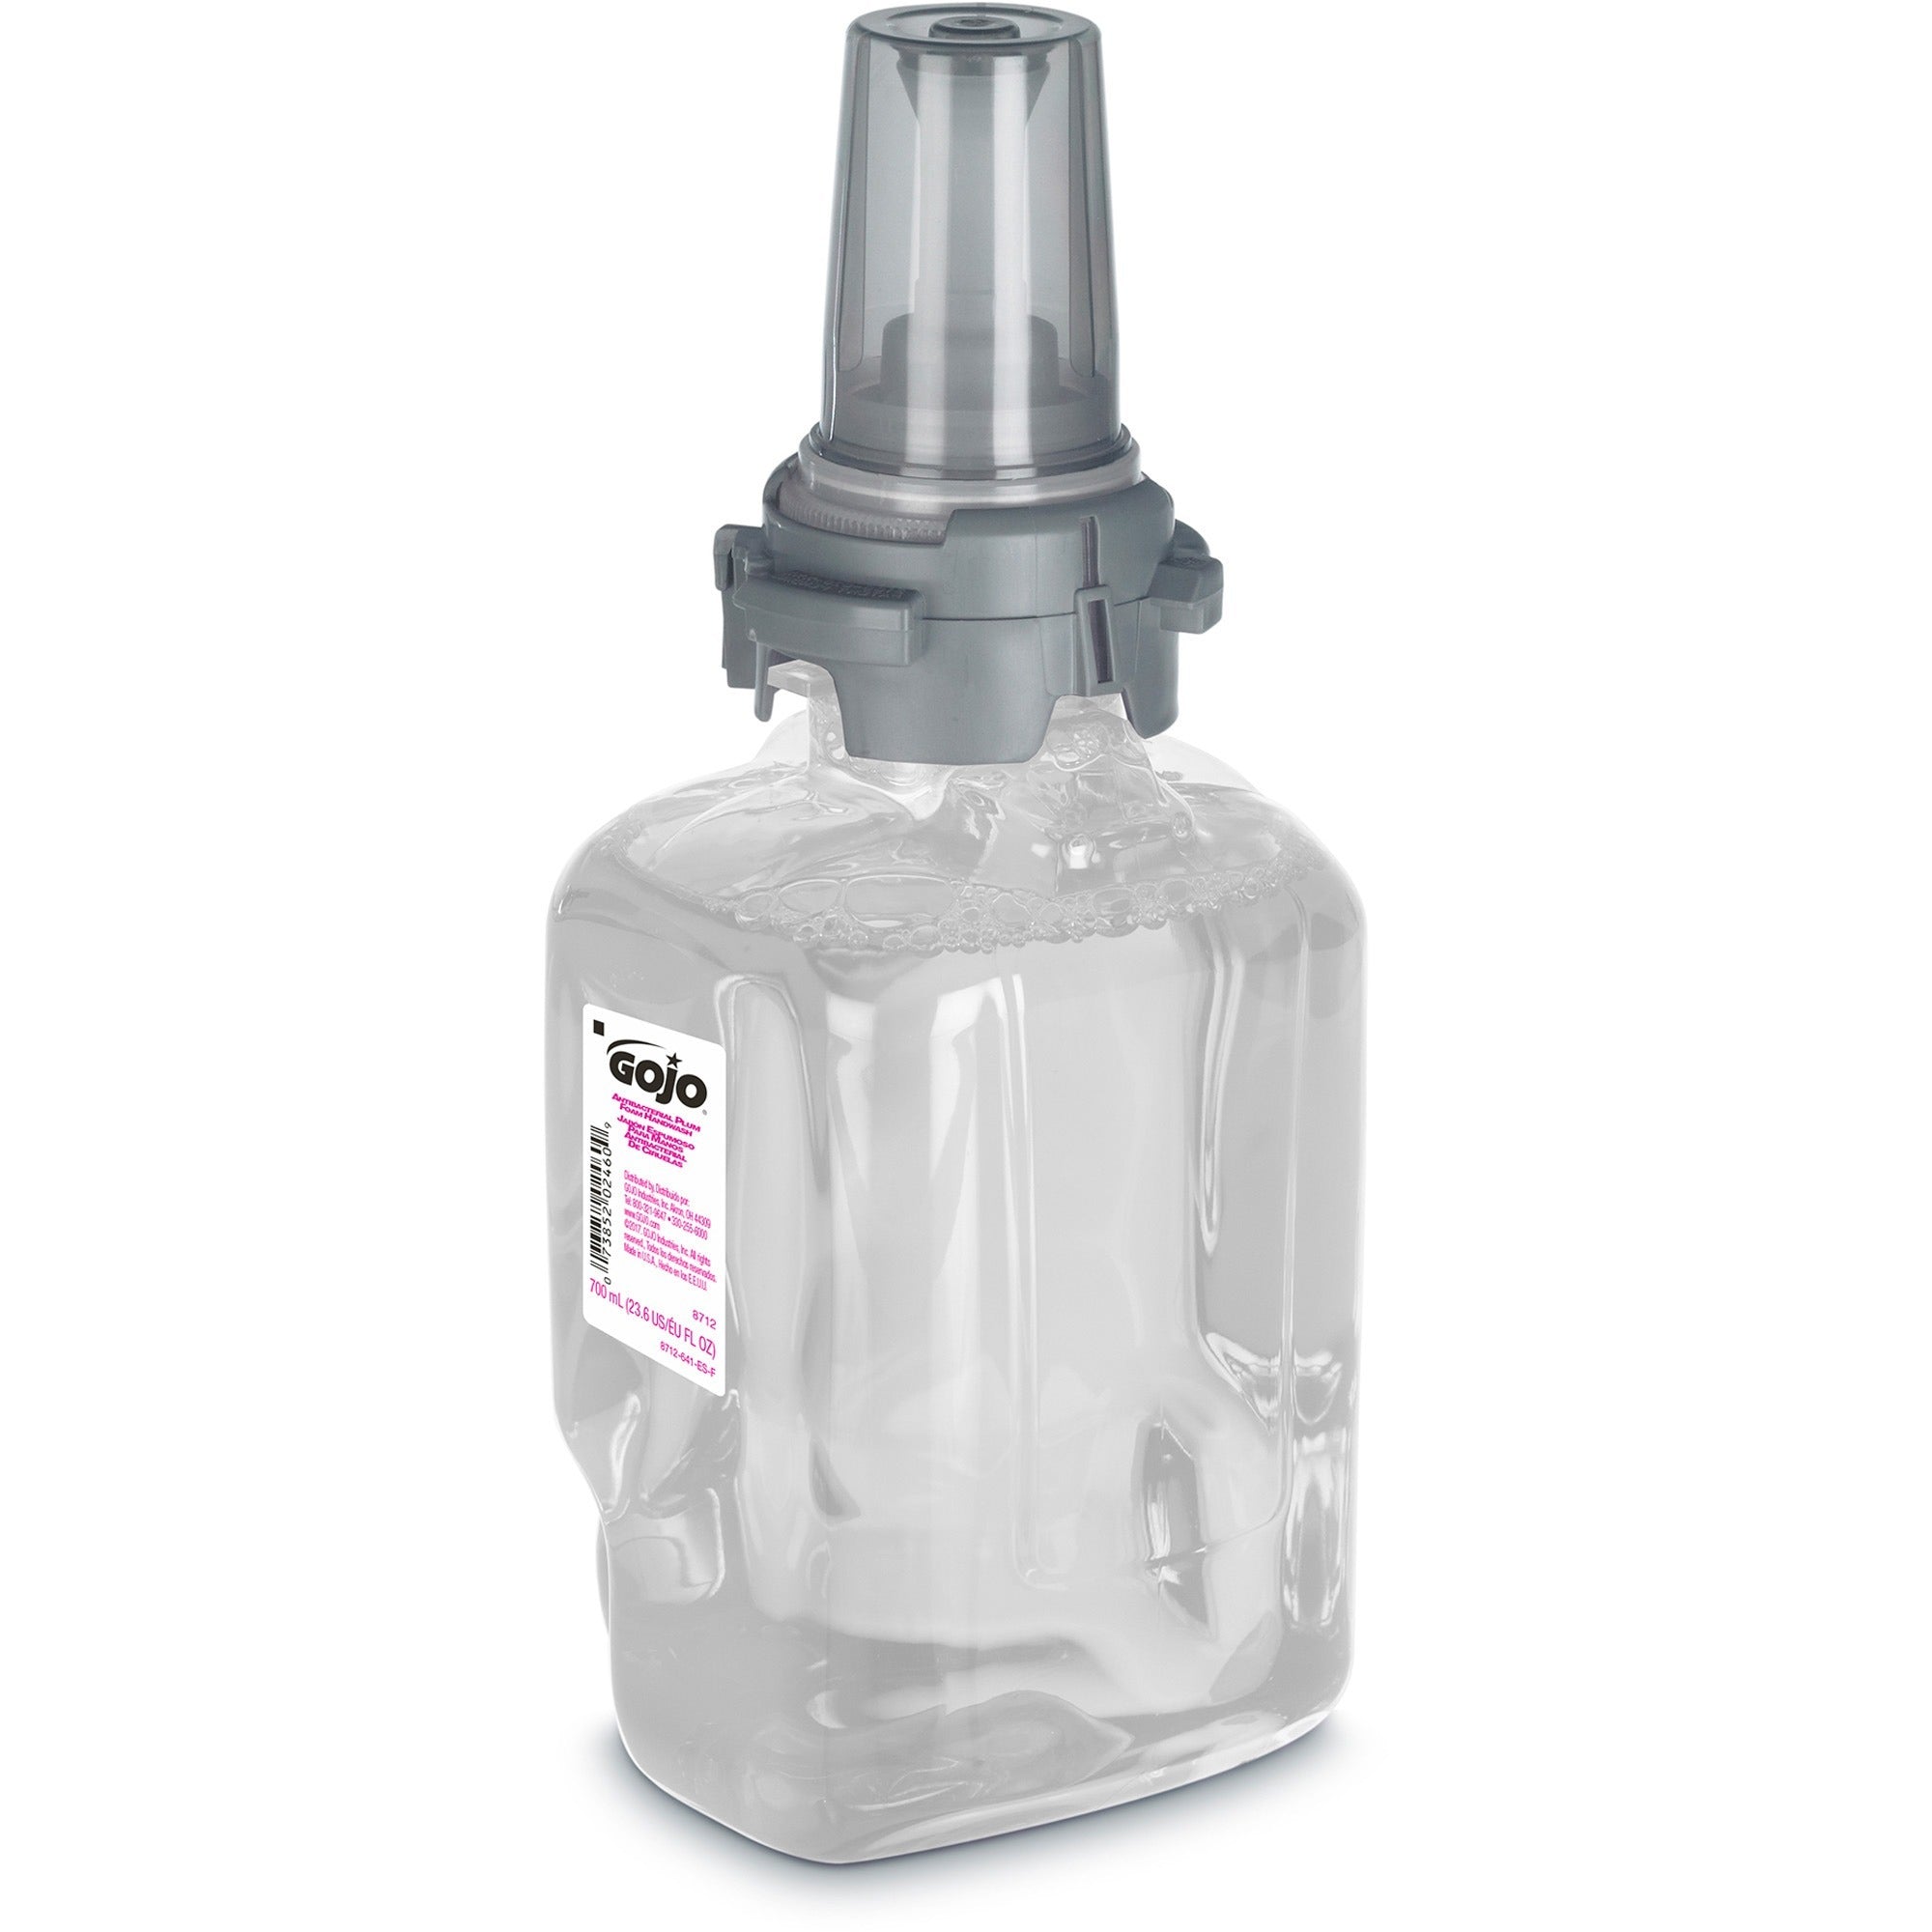 gojo-adx-7-dispenser-antibacterial-hand-soap-refill-plum-scentfor-237-fl-oz-700-ml-pump-bottle-dispenser-bacteria-remover-kill-germs-hand-skin-moisturizing-antibacterial-clear-rich-lather-bio-based-4-carton_goj871204ct - 3